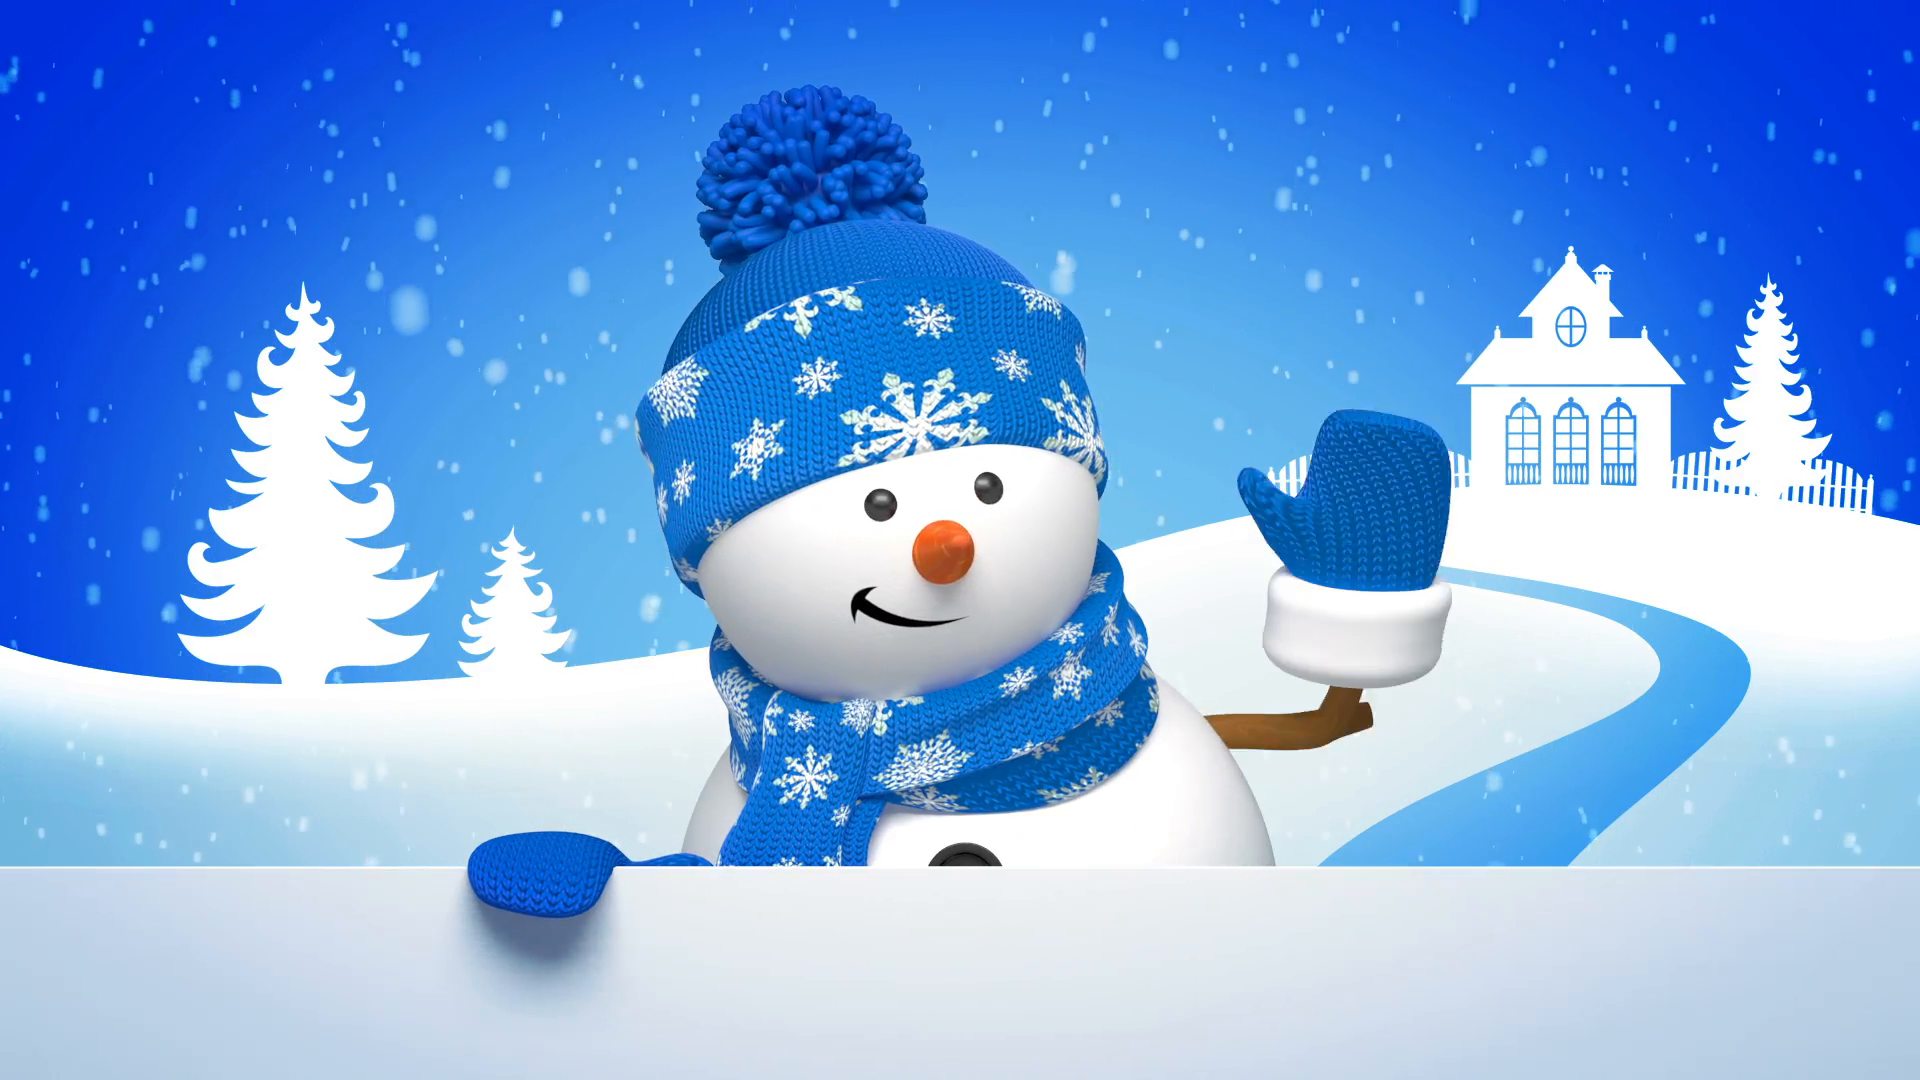 Snowman Wallpapers Free Download  PixelsTalkNet